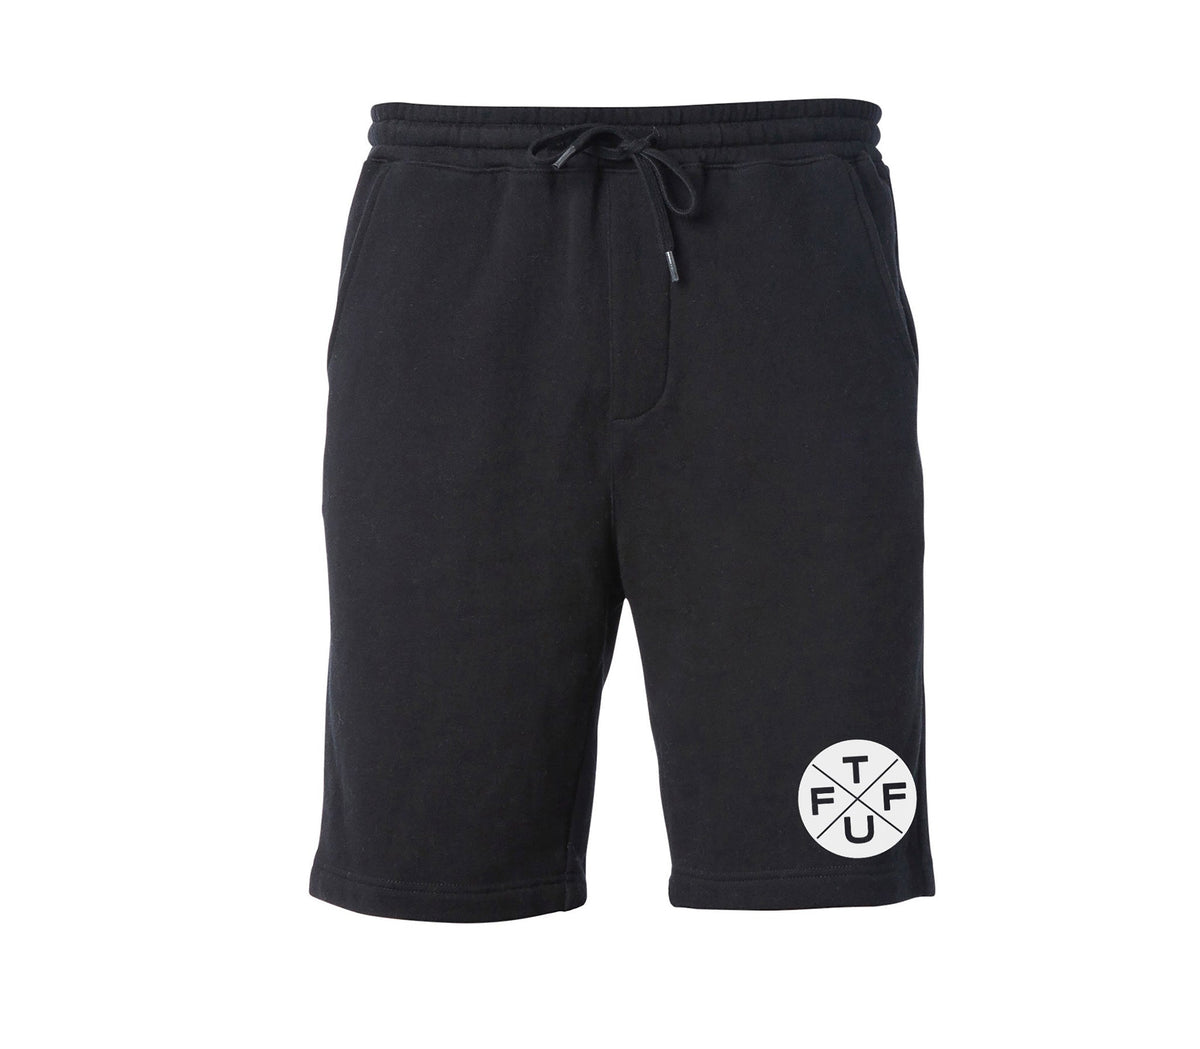 TUFF INSIGNIA Tapered Fleece Shorts XS / Black TuffWraps.com